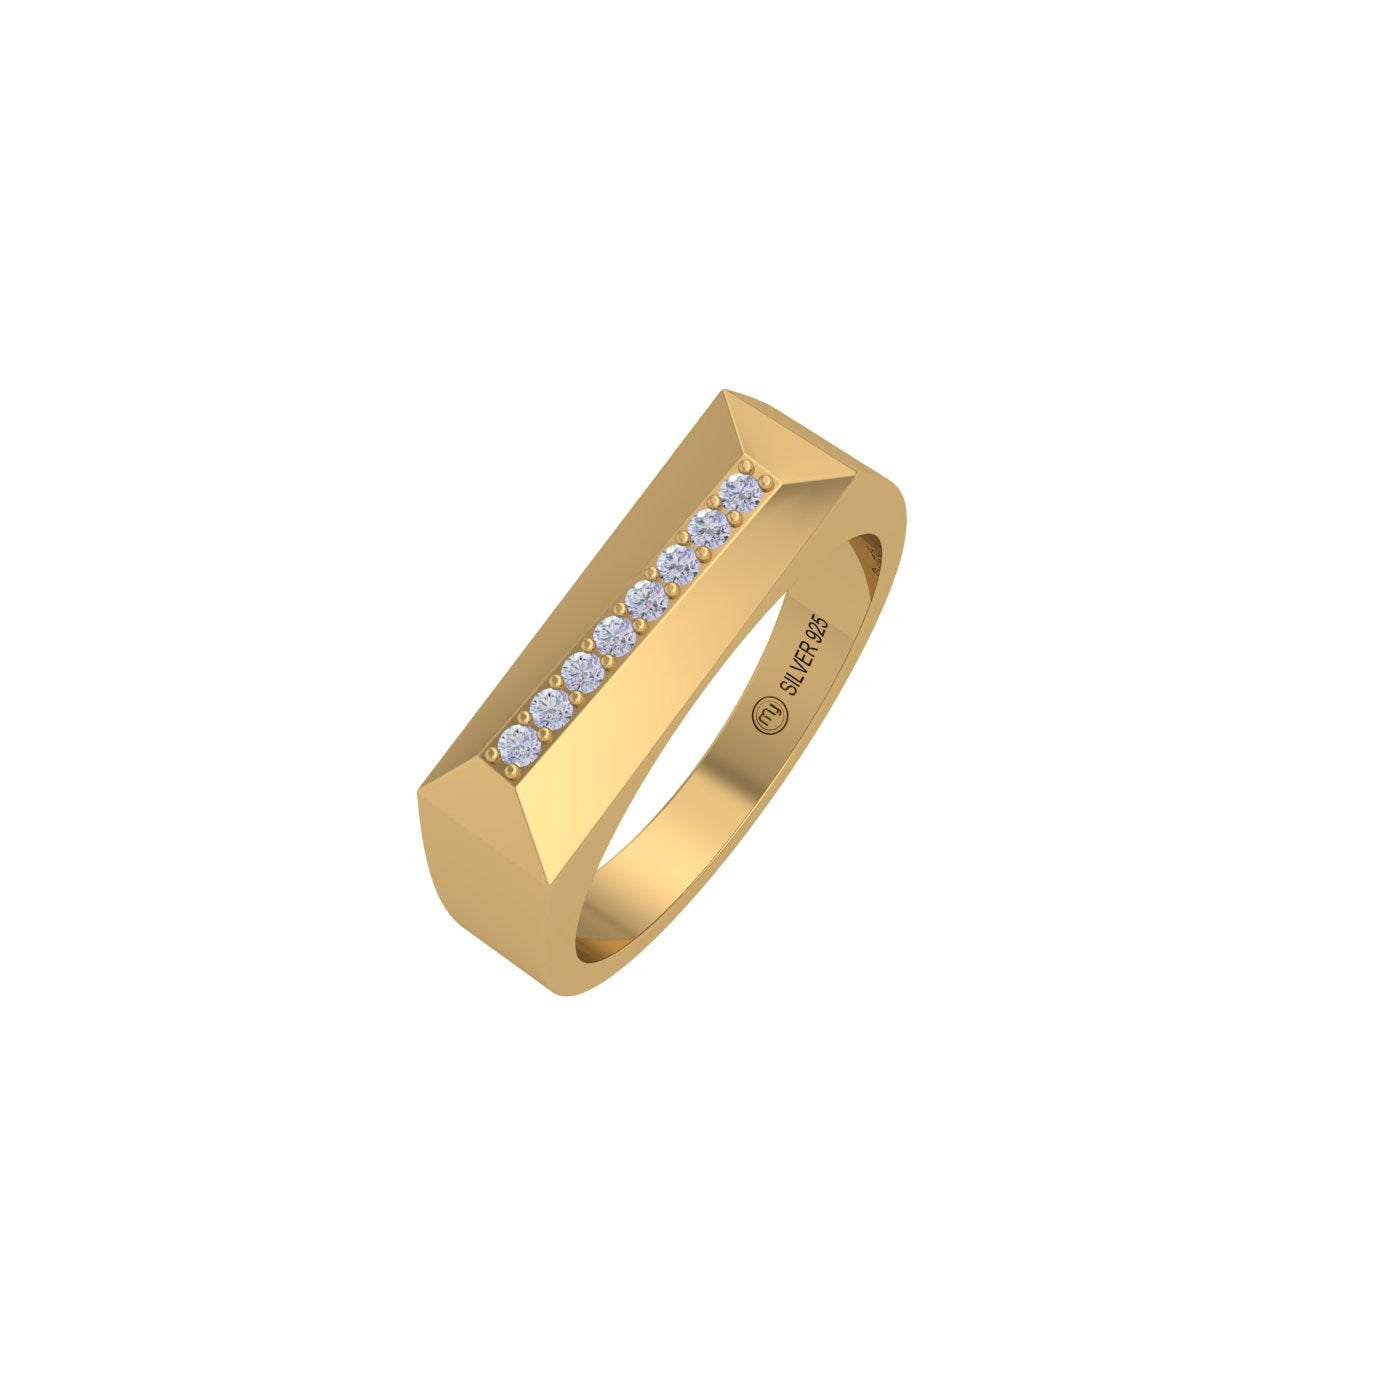 Axis Diamond Men's Ring